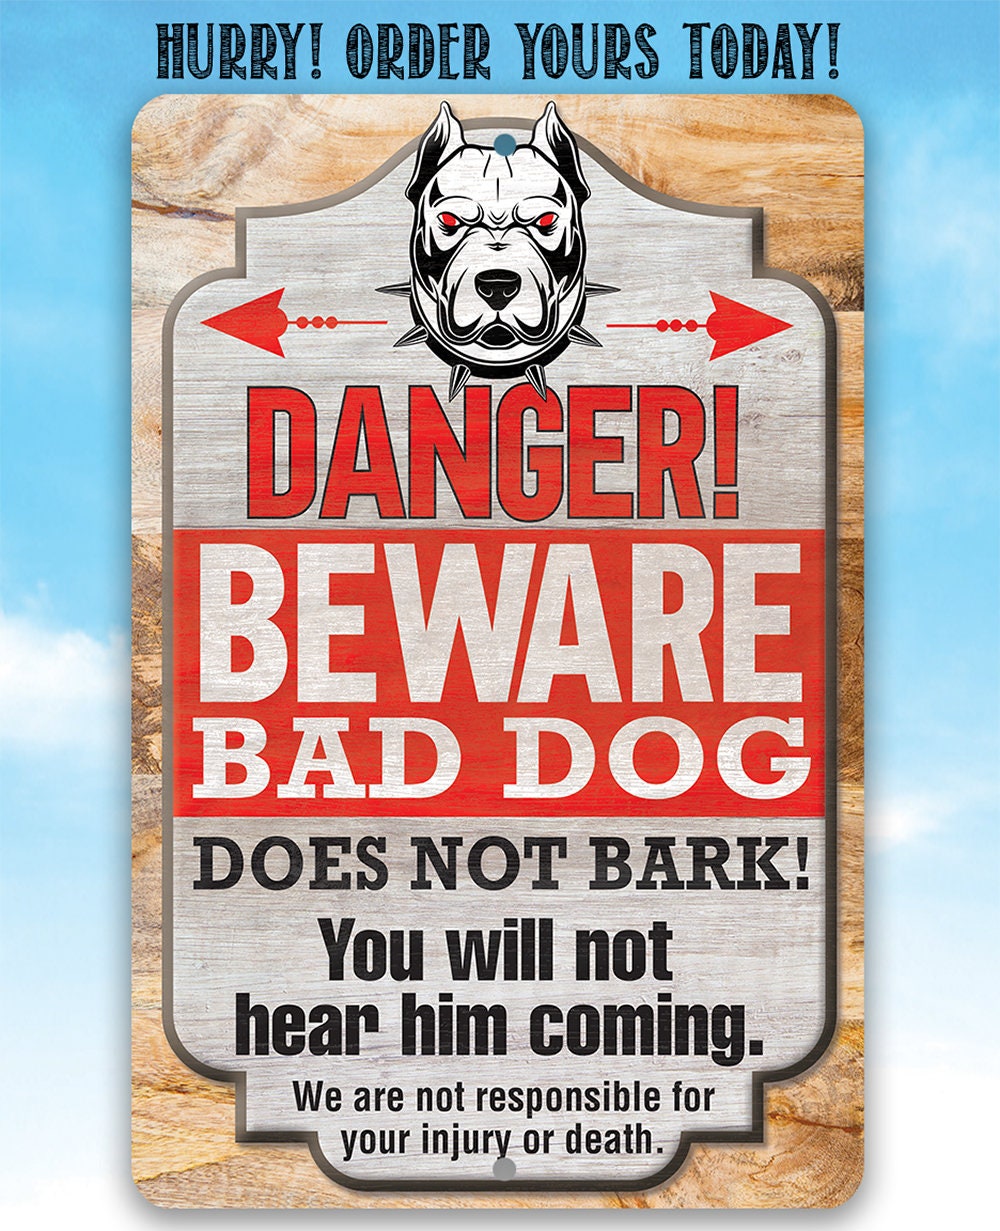 Danger! Beware Bad Dog, Does Not Bark - Metal Sign Metal Sign Lone Star Art 